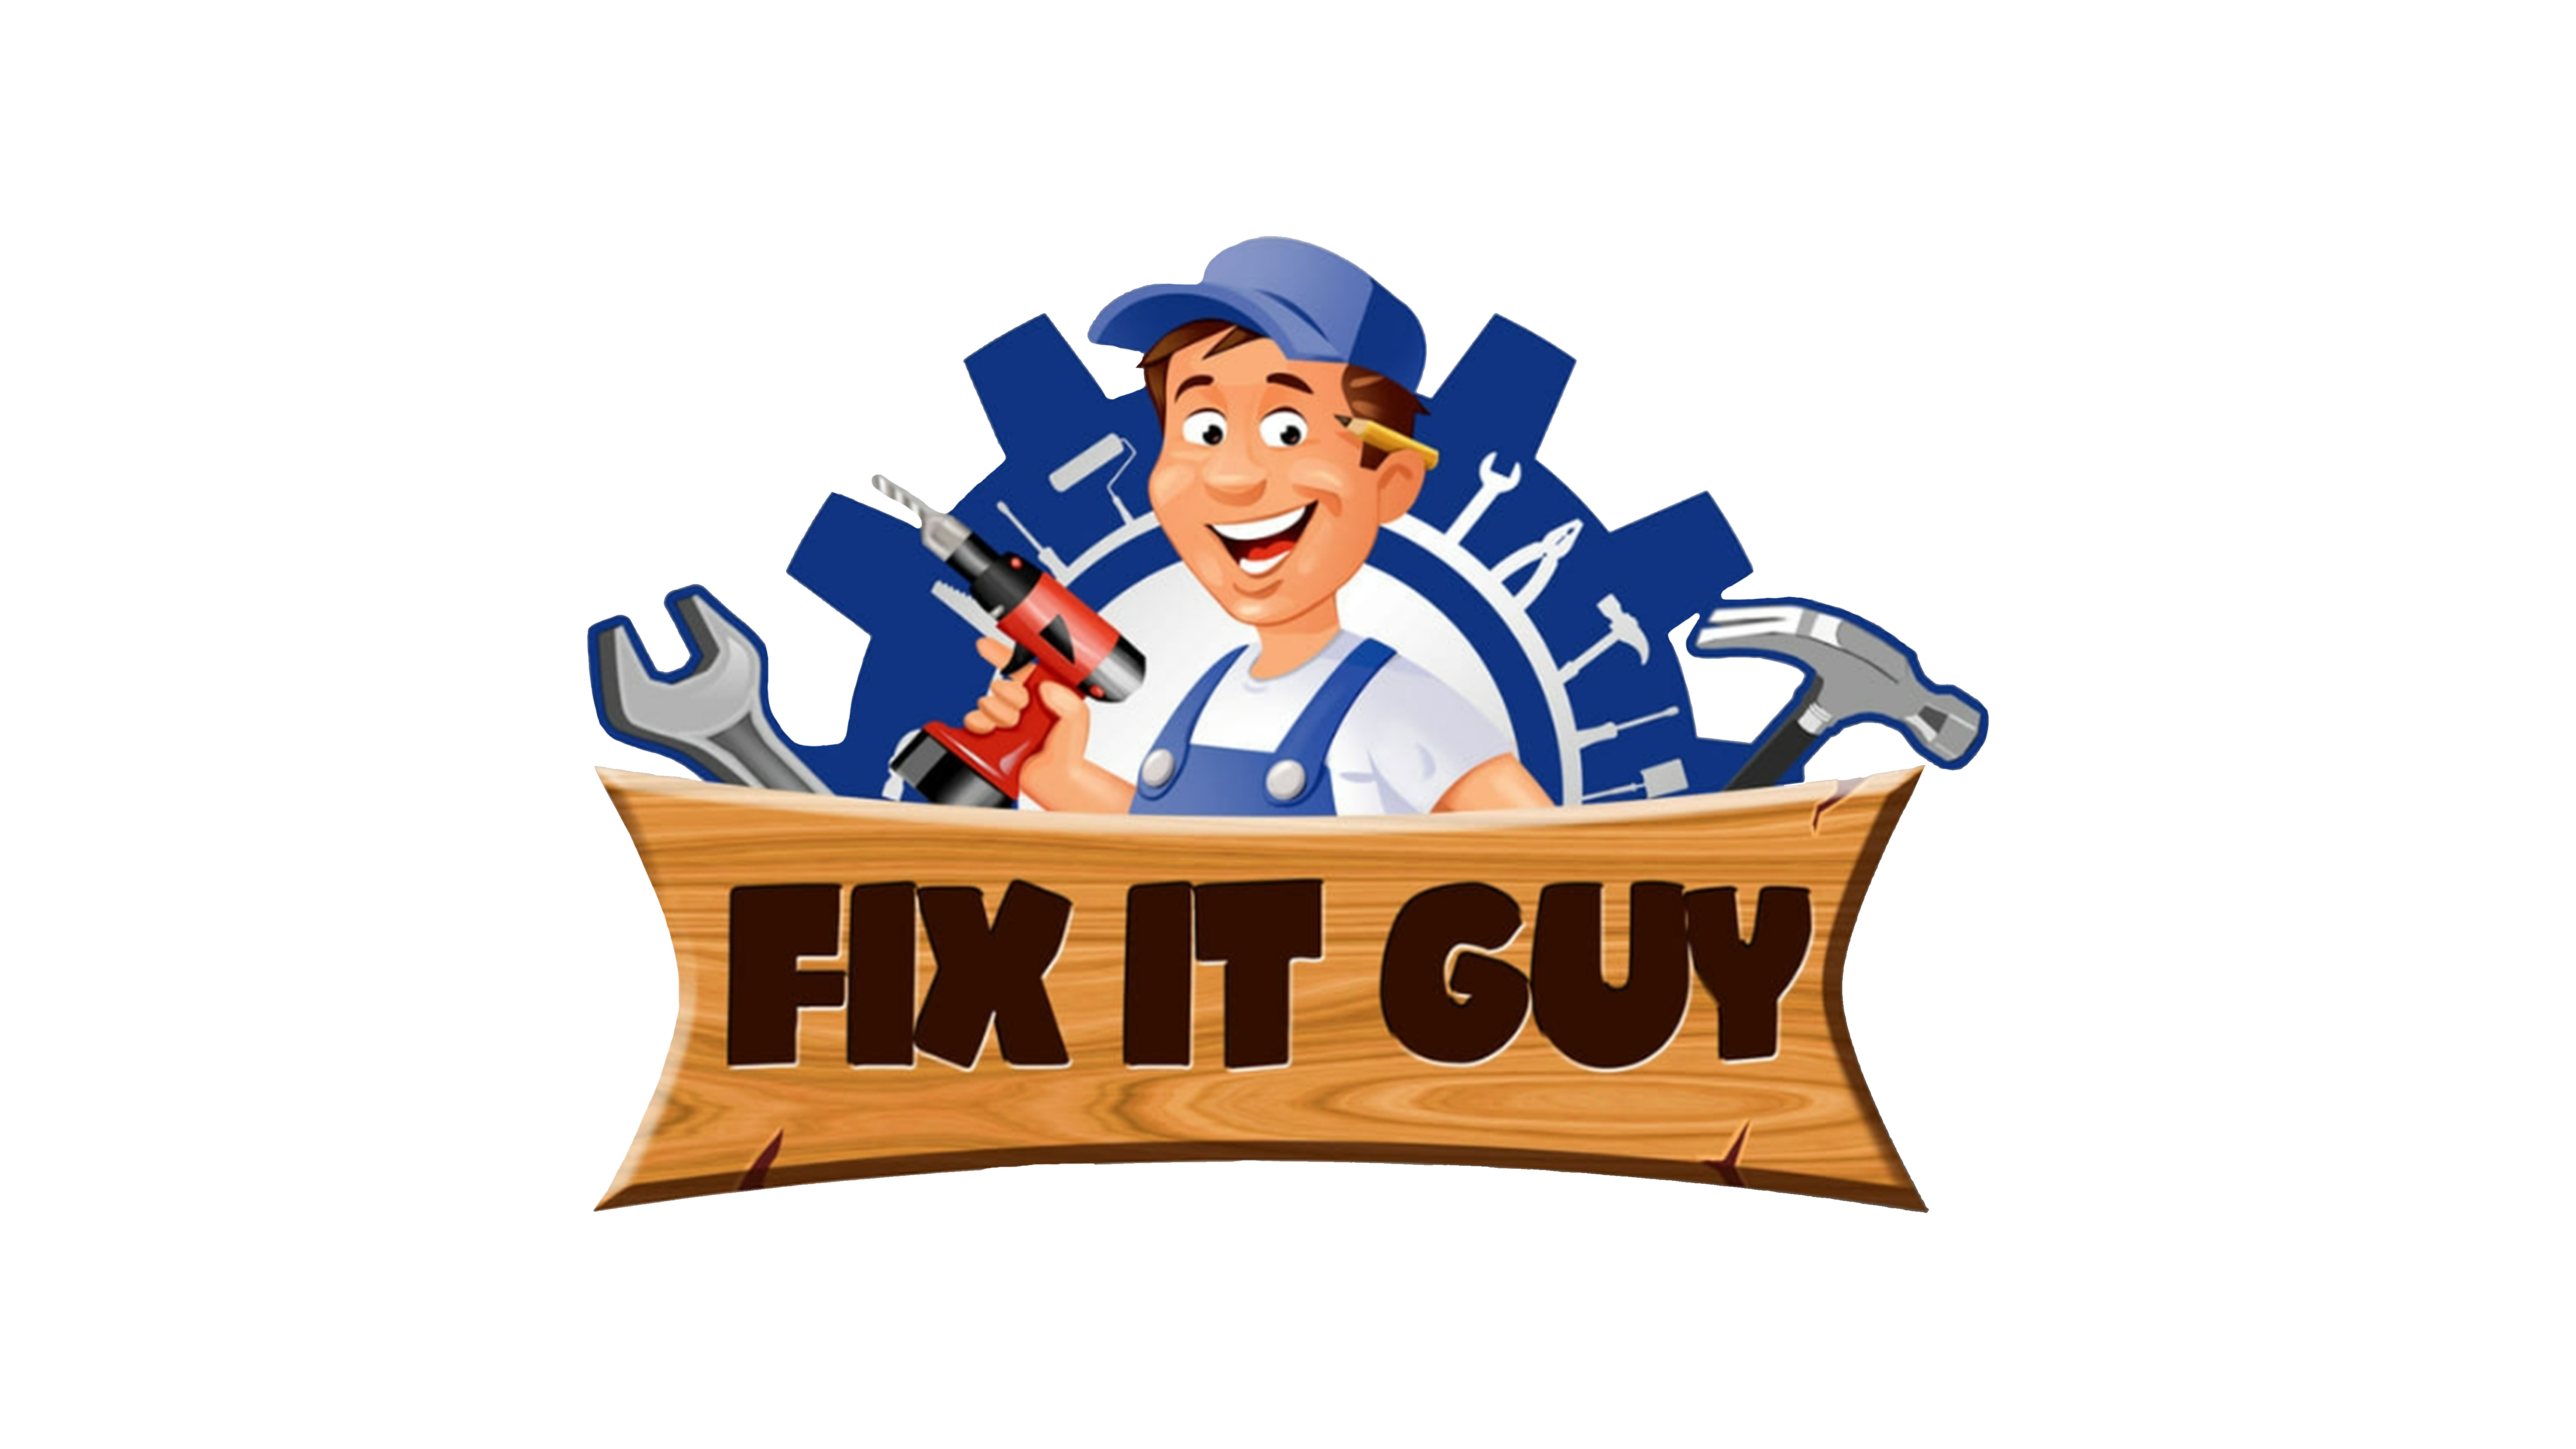 Fix It Guys, LLC Logo